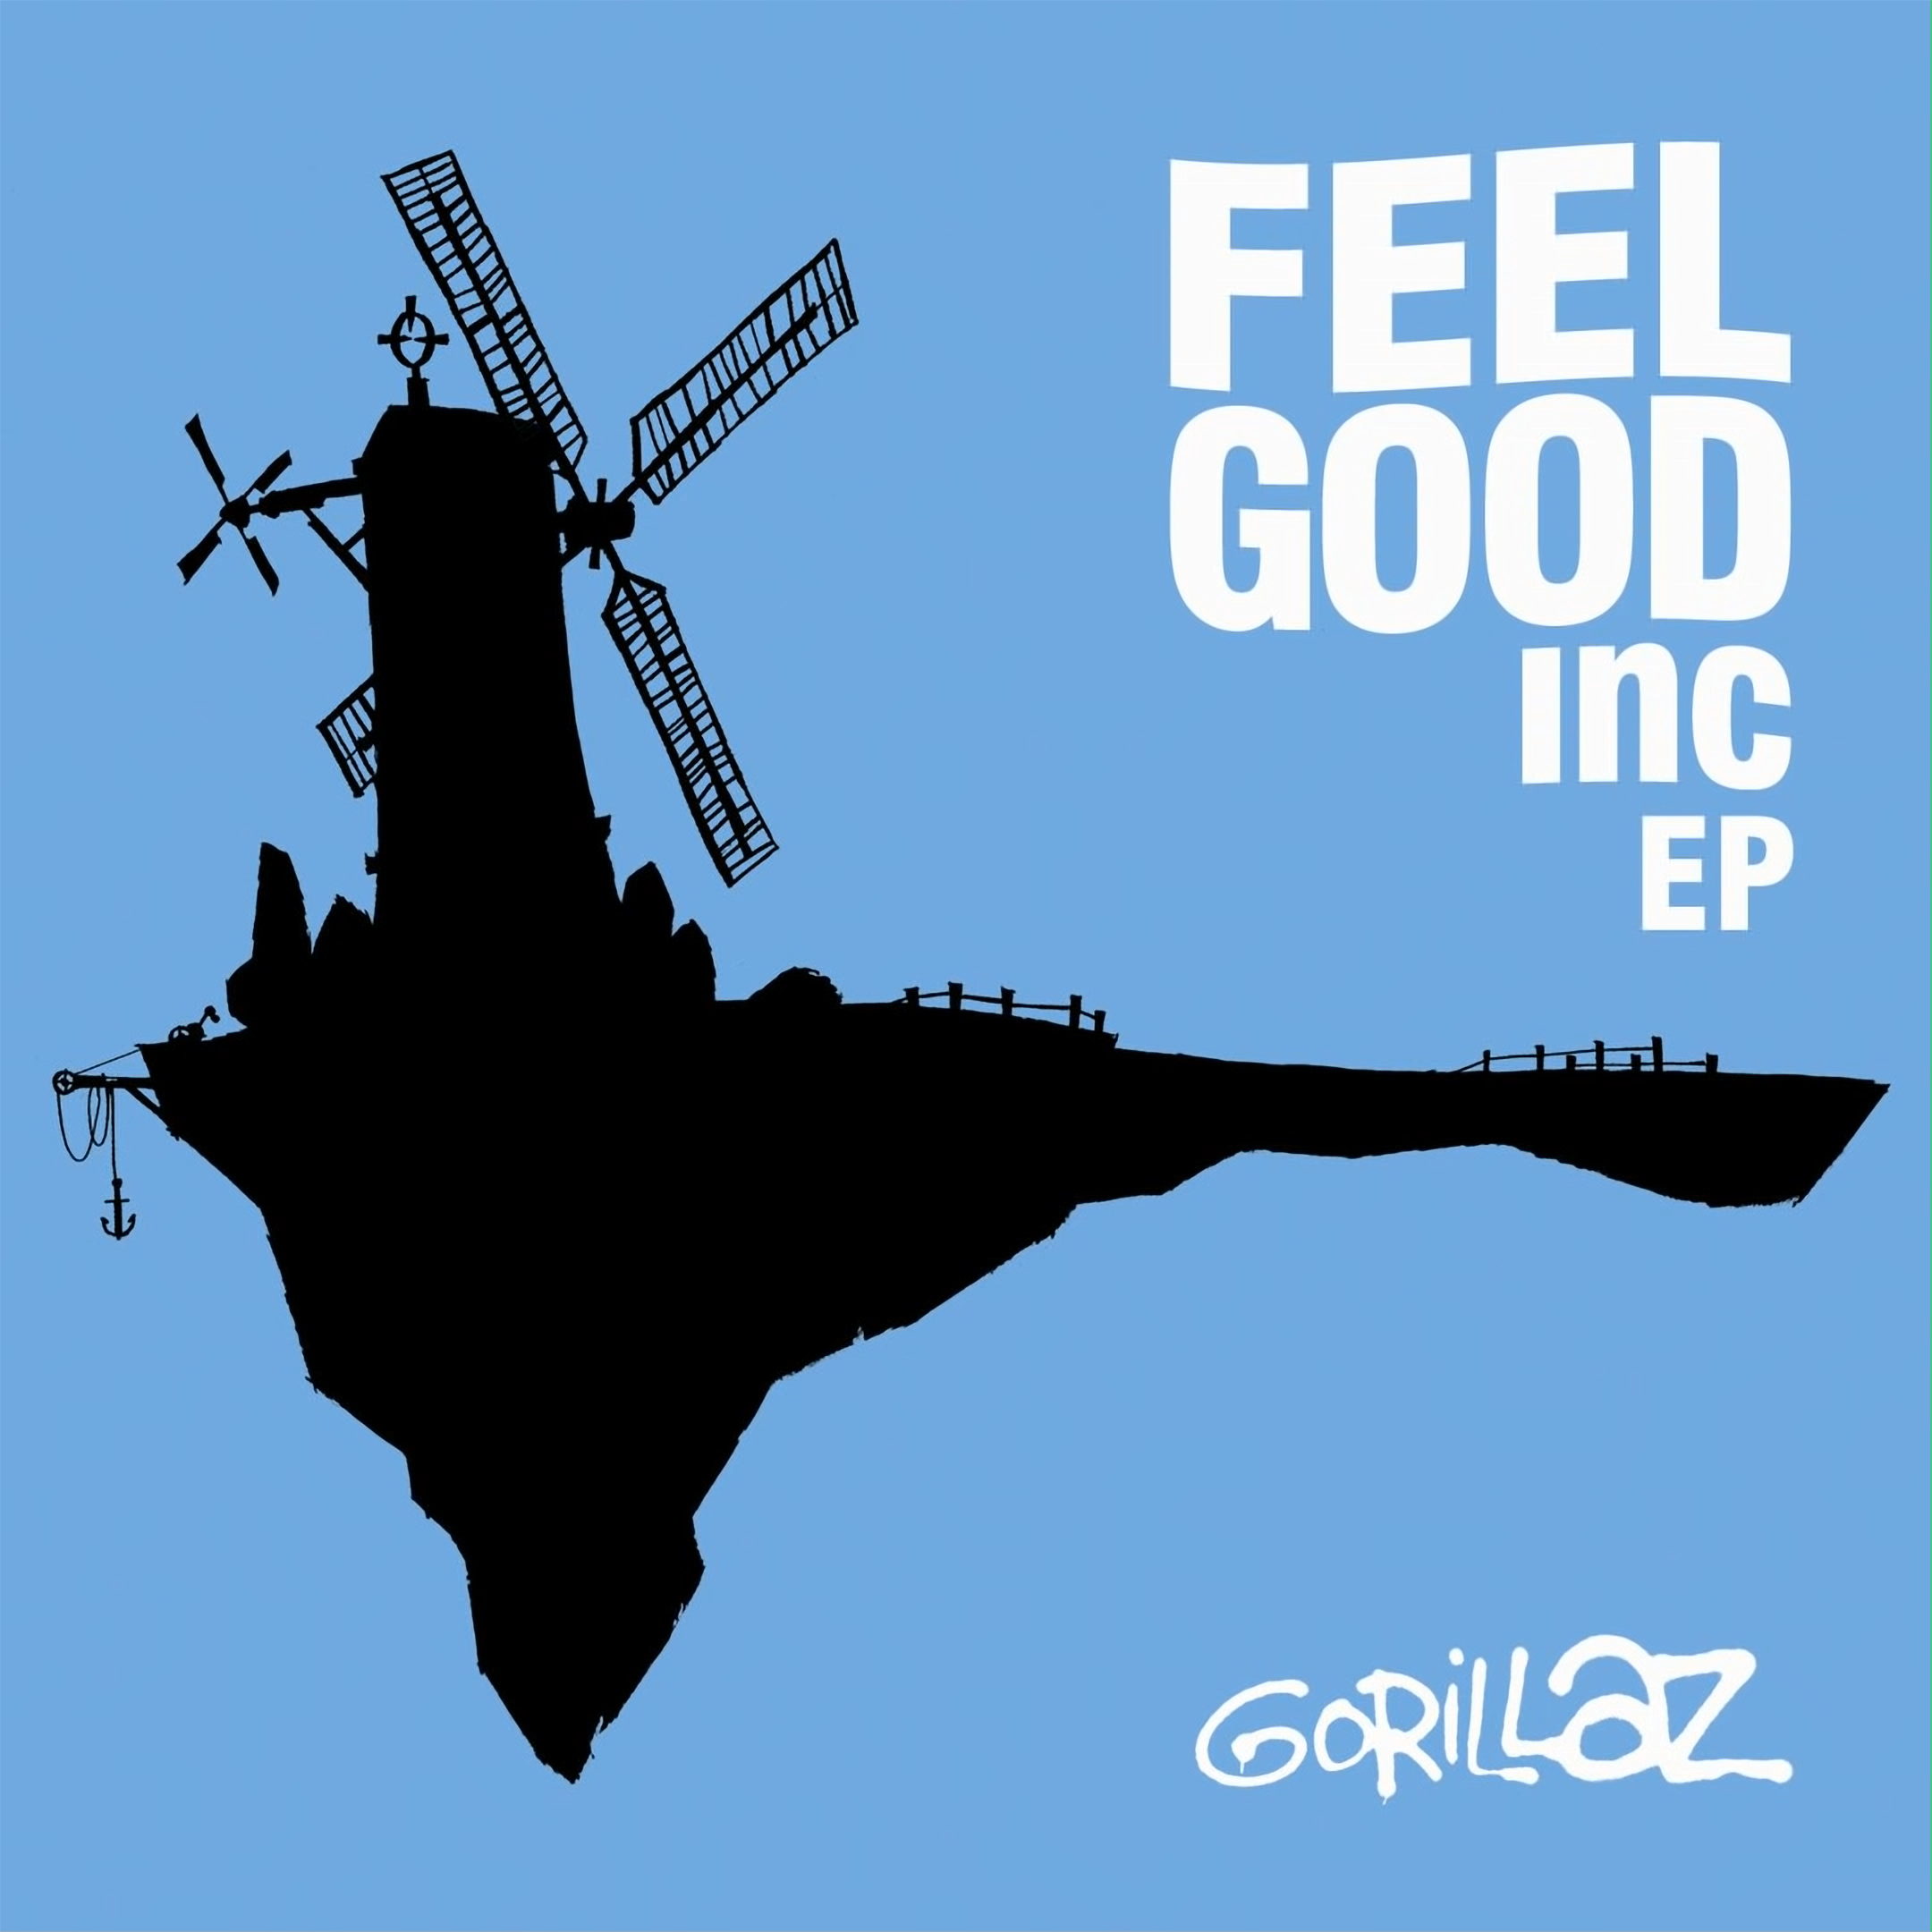 Горилаз feel good inc. Feel good Inc. Gorillaz feel good Inc. Feel good Inc обложка. Gorillaz feel good Inc обложка.